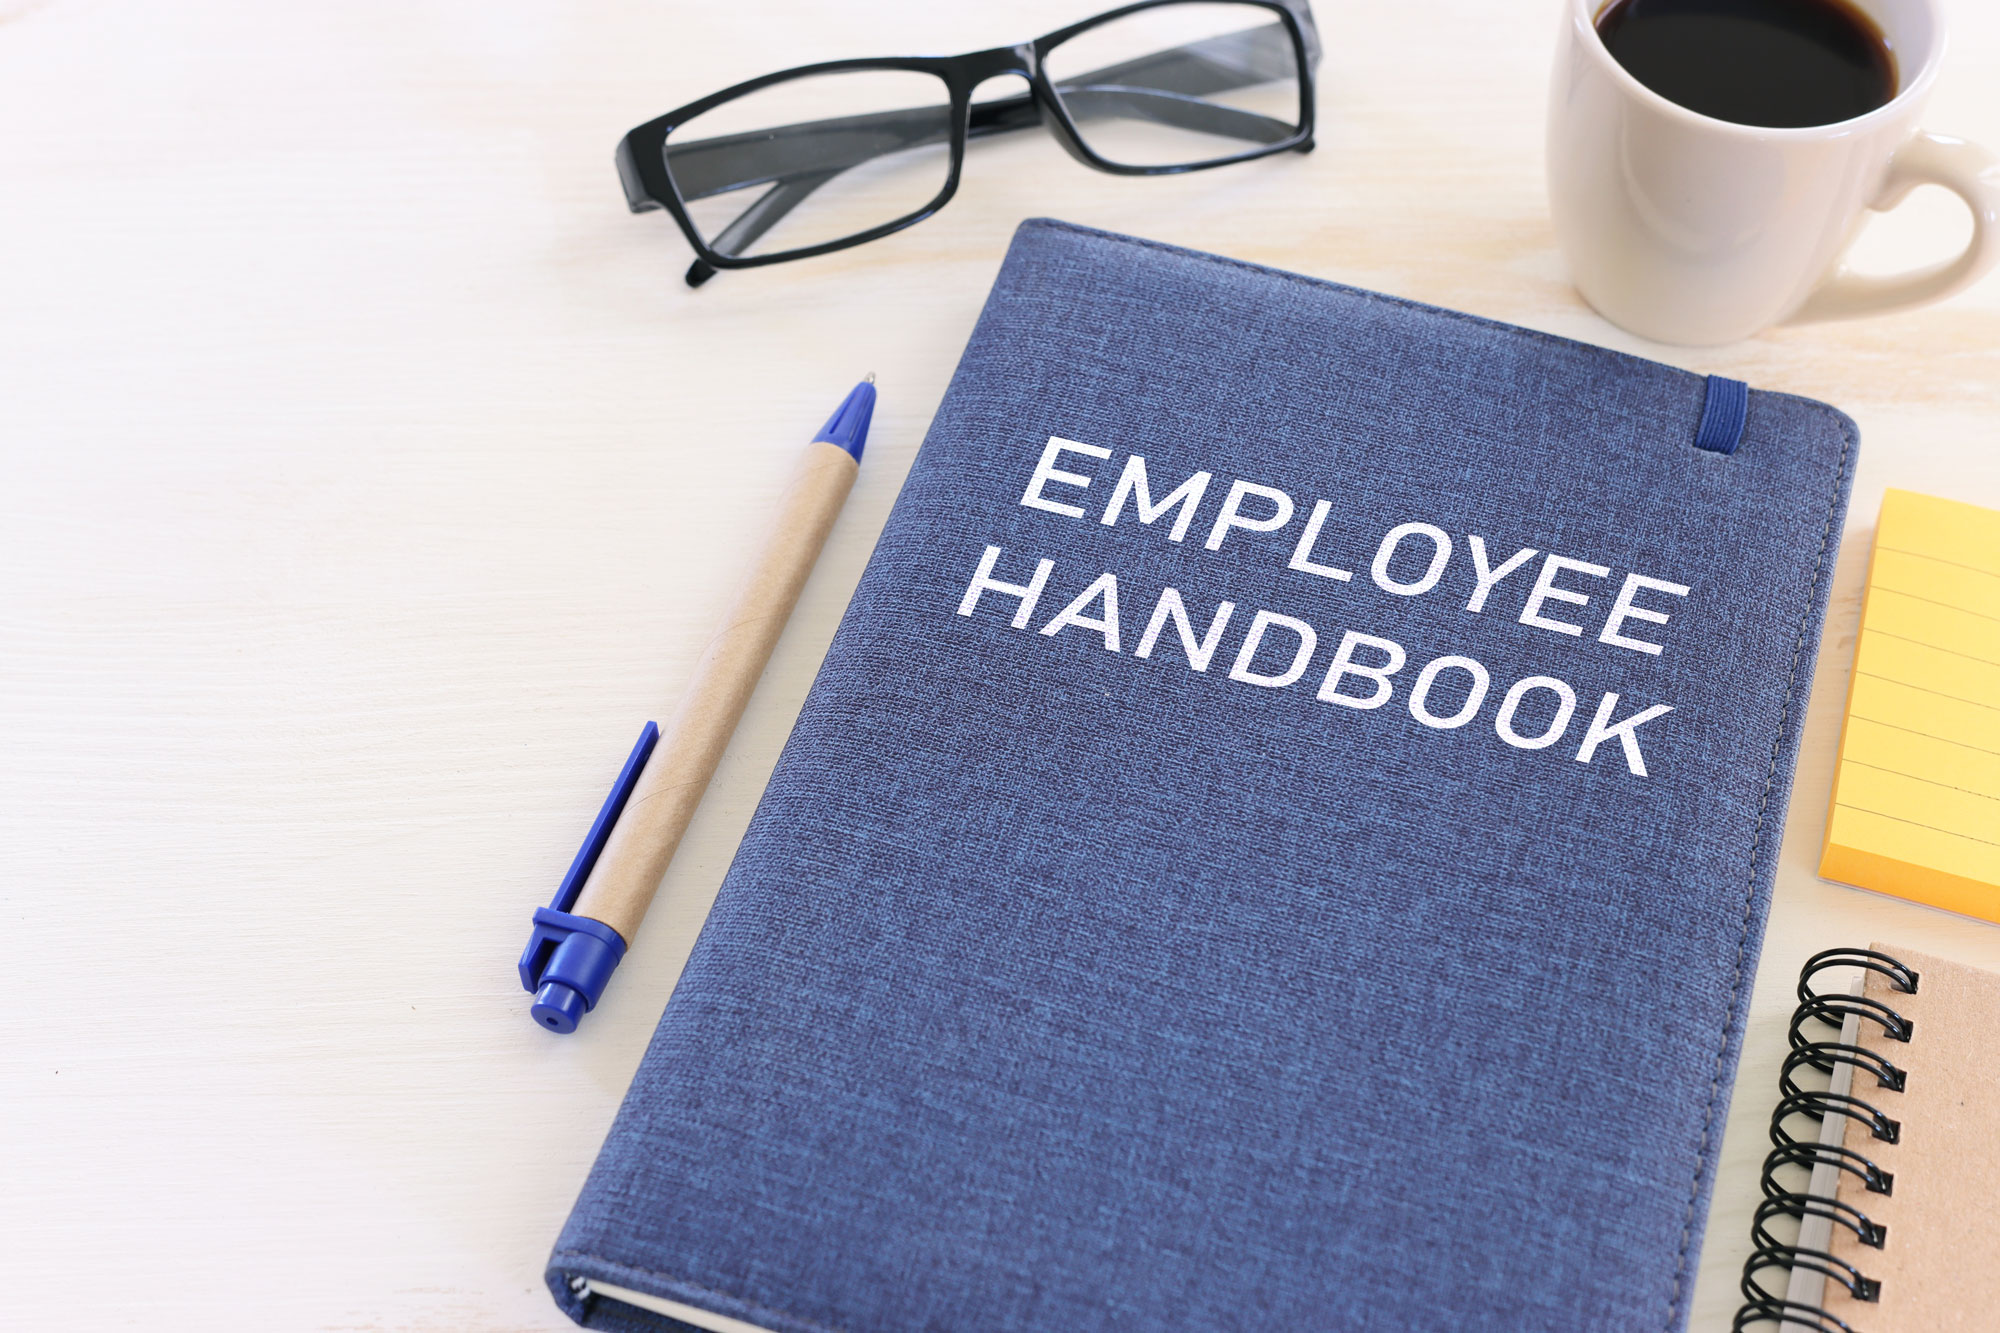 a compliant employer handbook on a desk